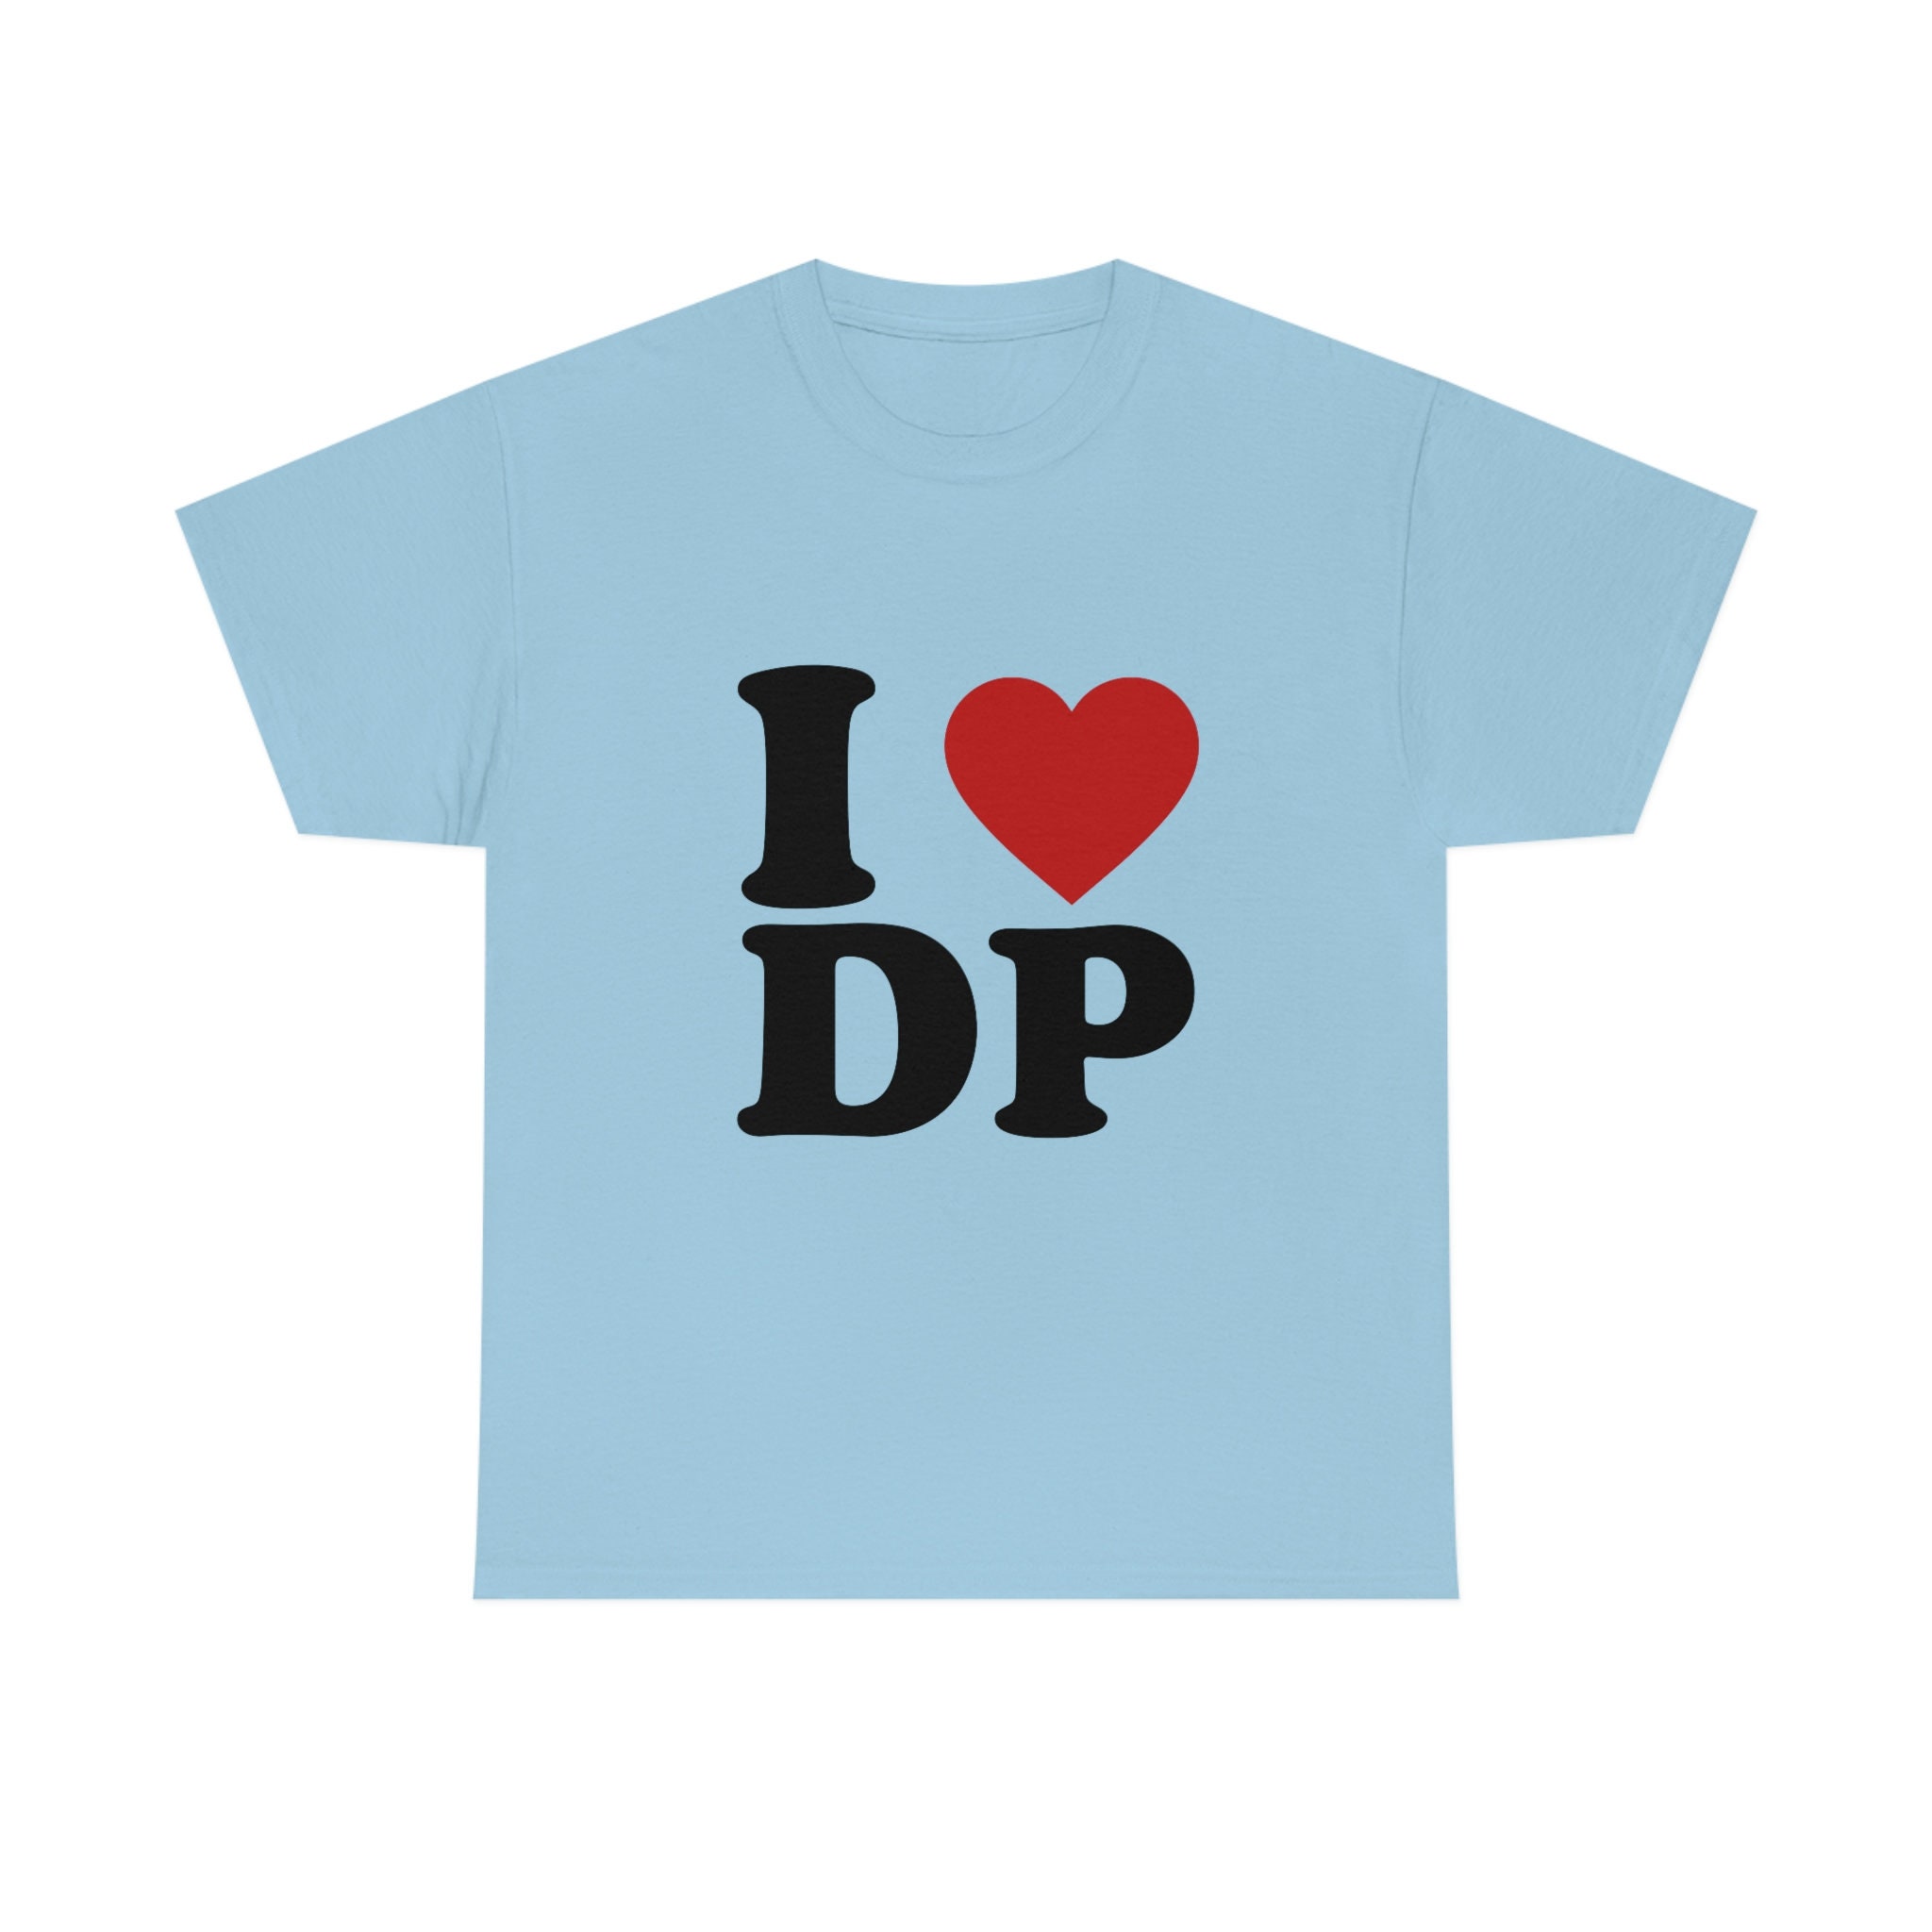 Amazon.com: I love dp shirt I heard dp t-shirt : Clothing, Shoes & Jewelry